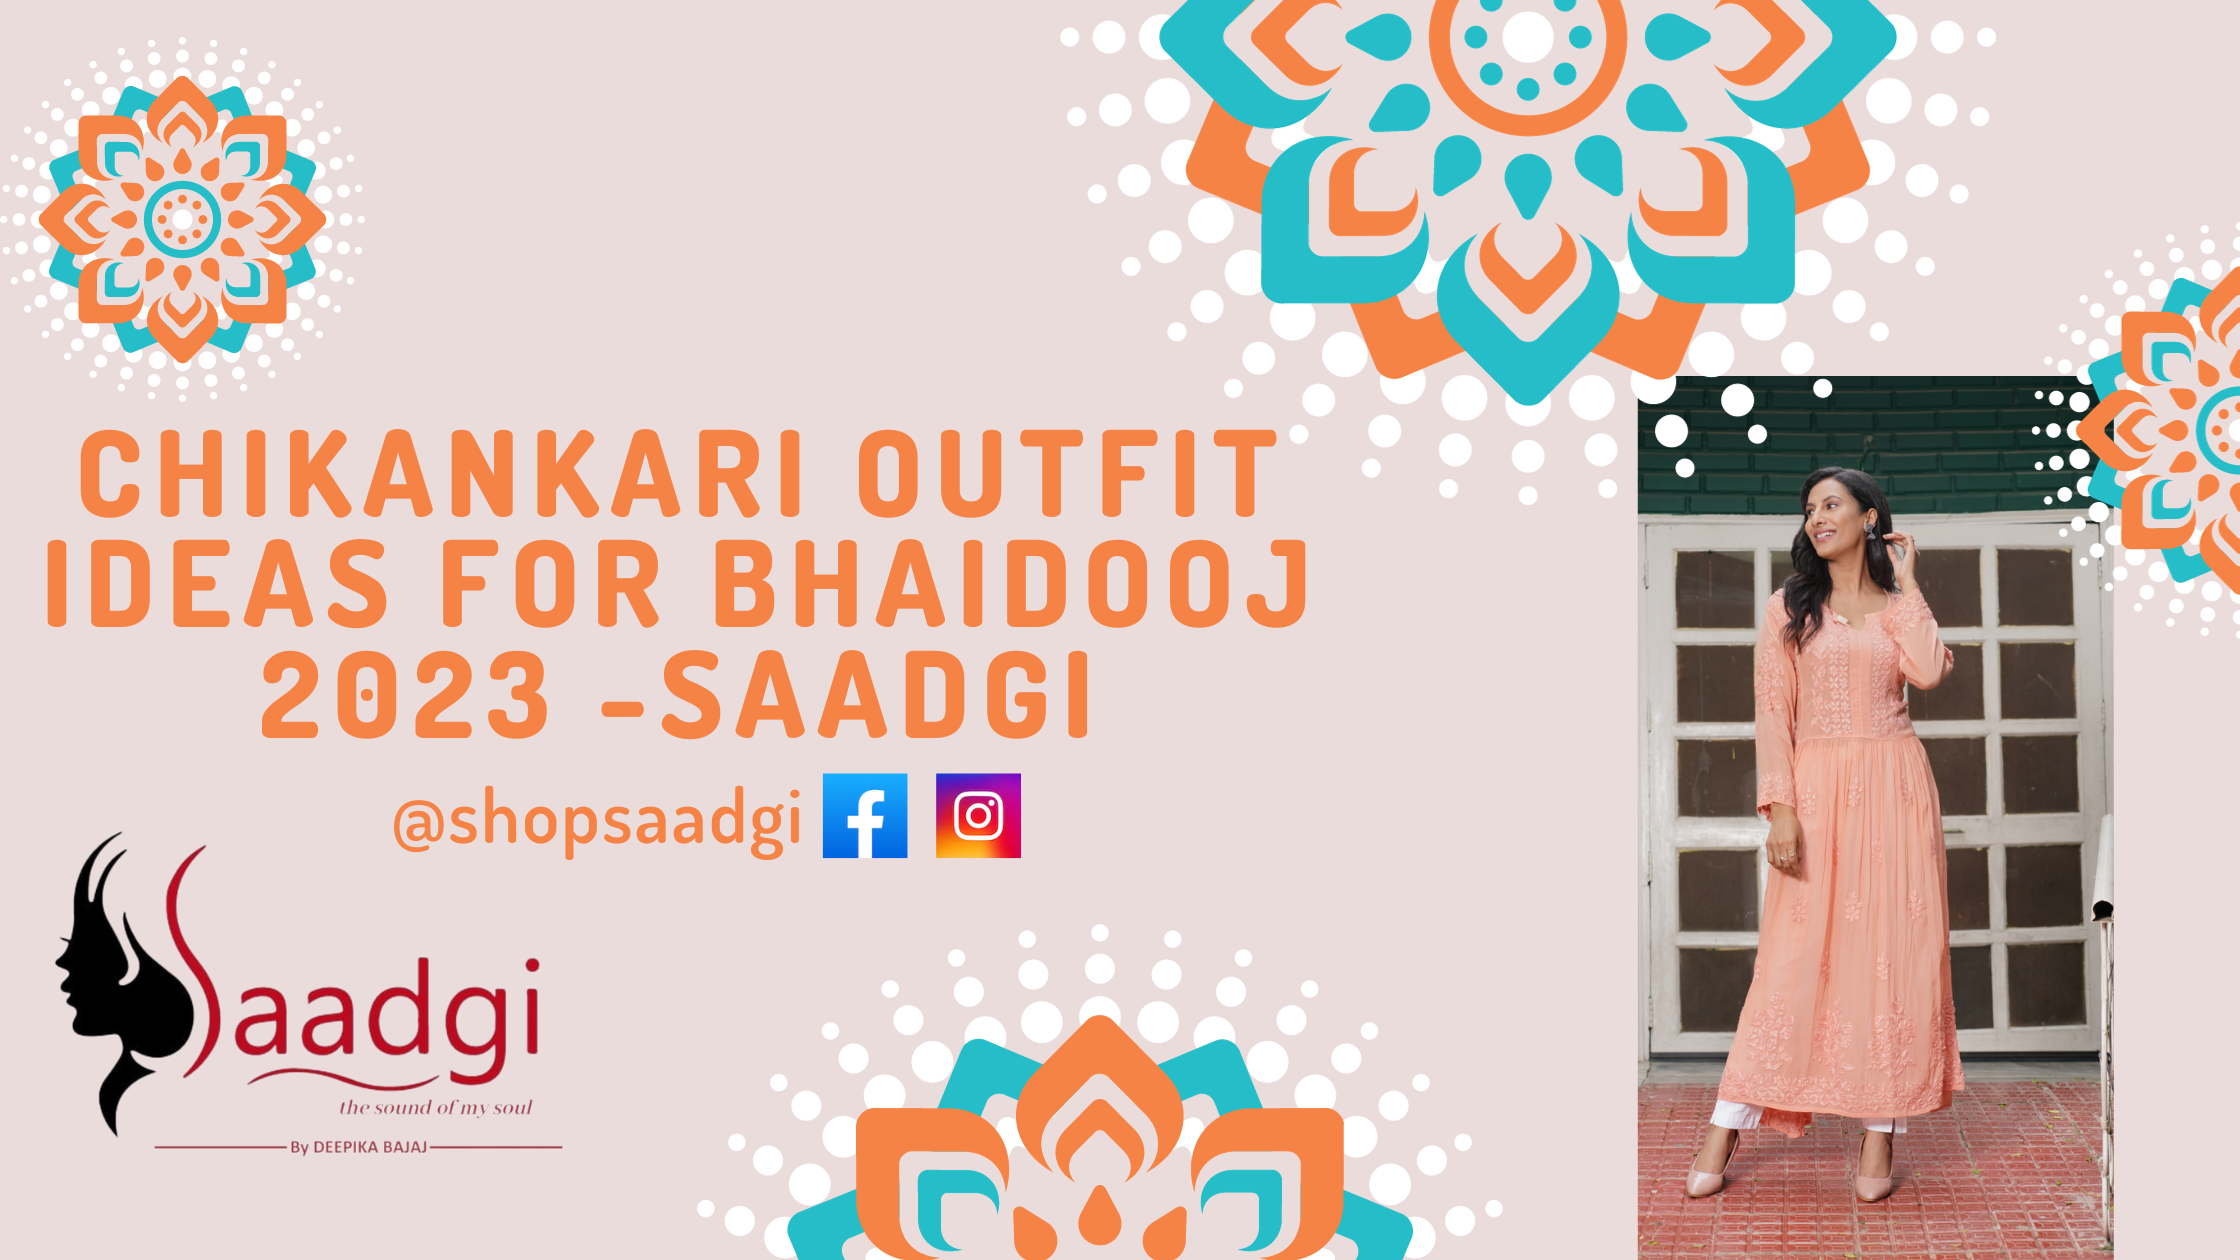 Chikankari Outfit Ideas for Bhaidooj 2023 -Saadgi